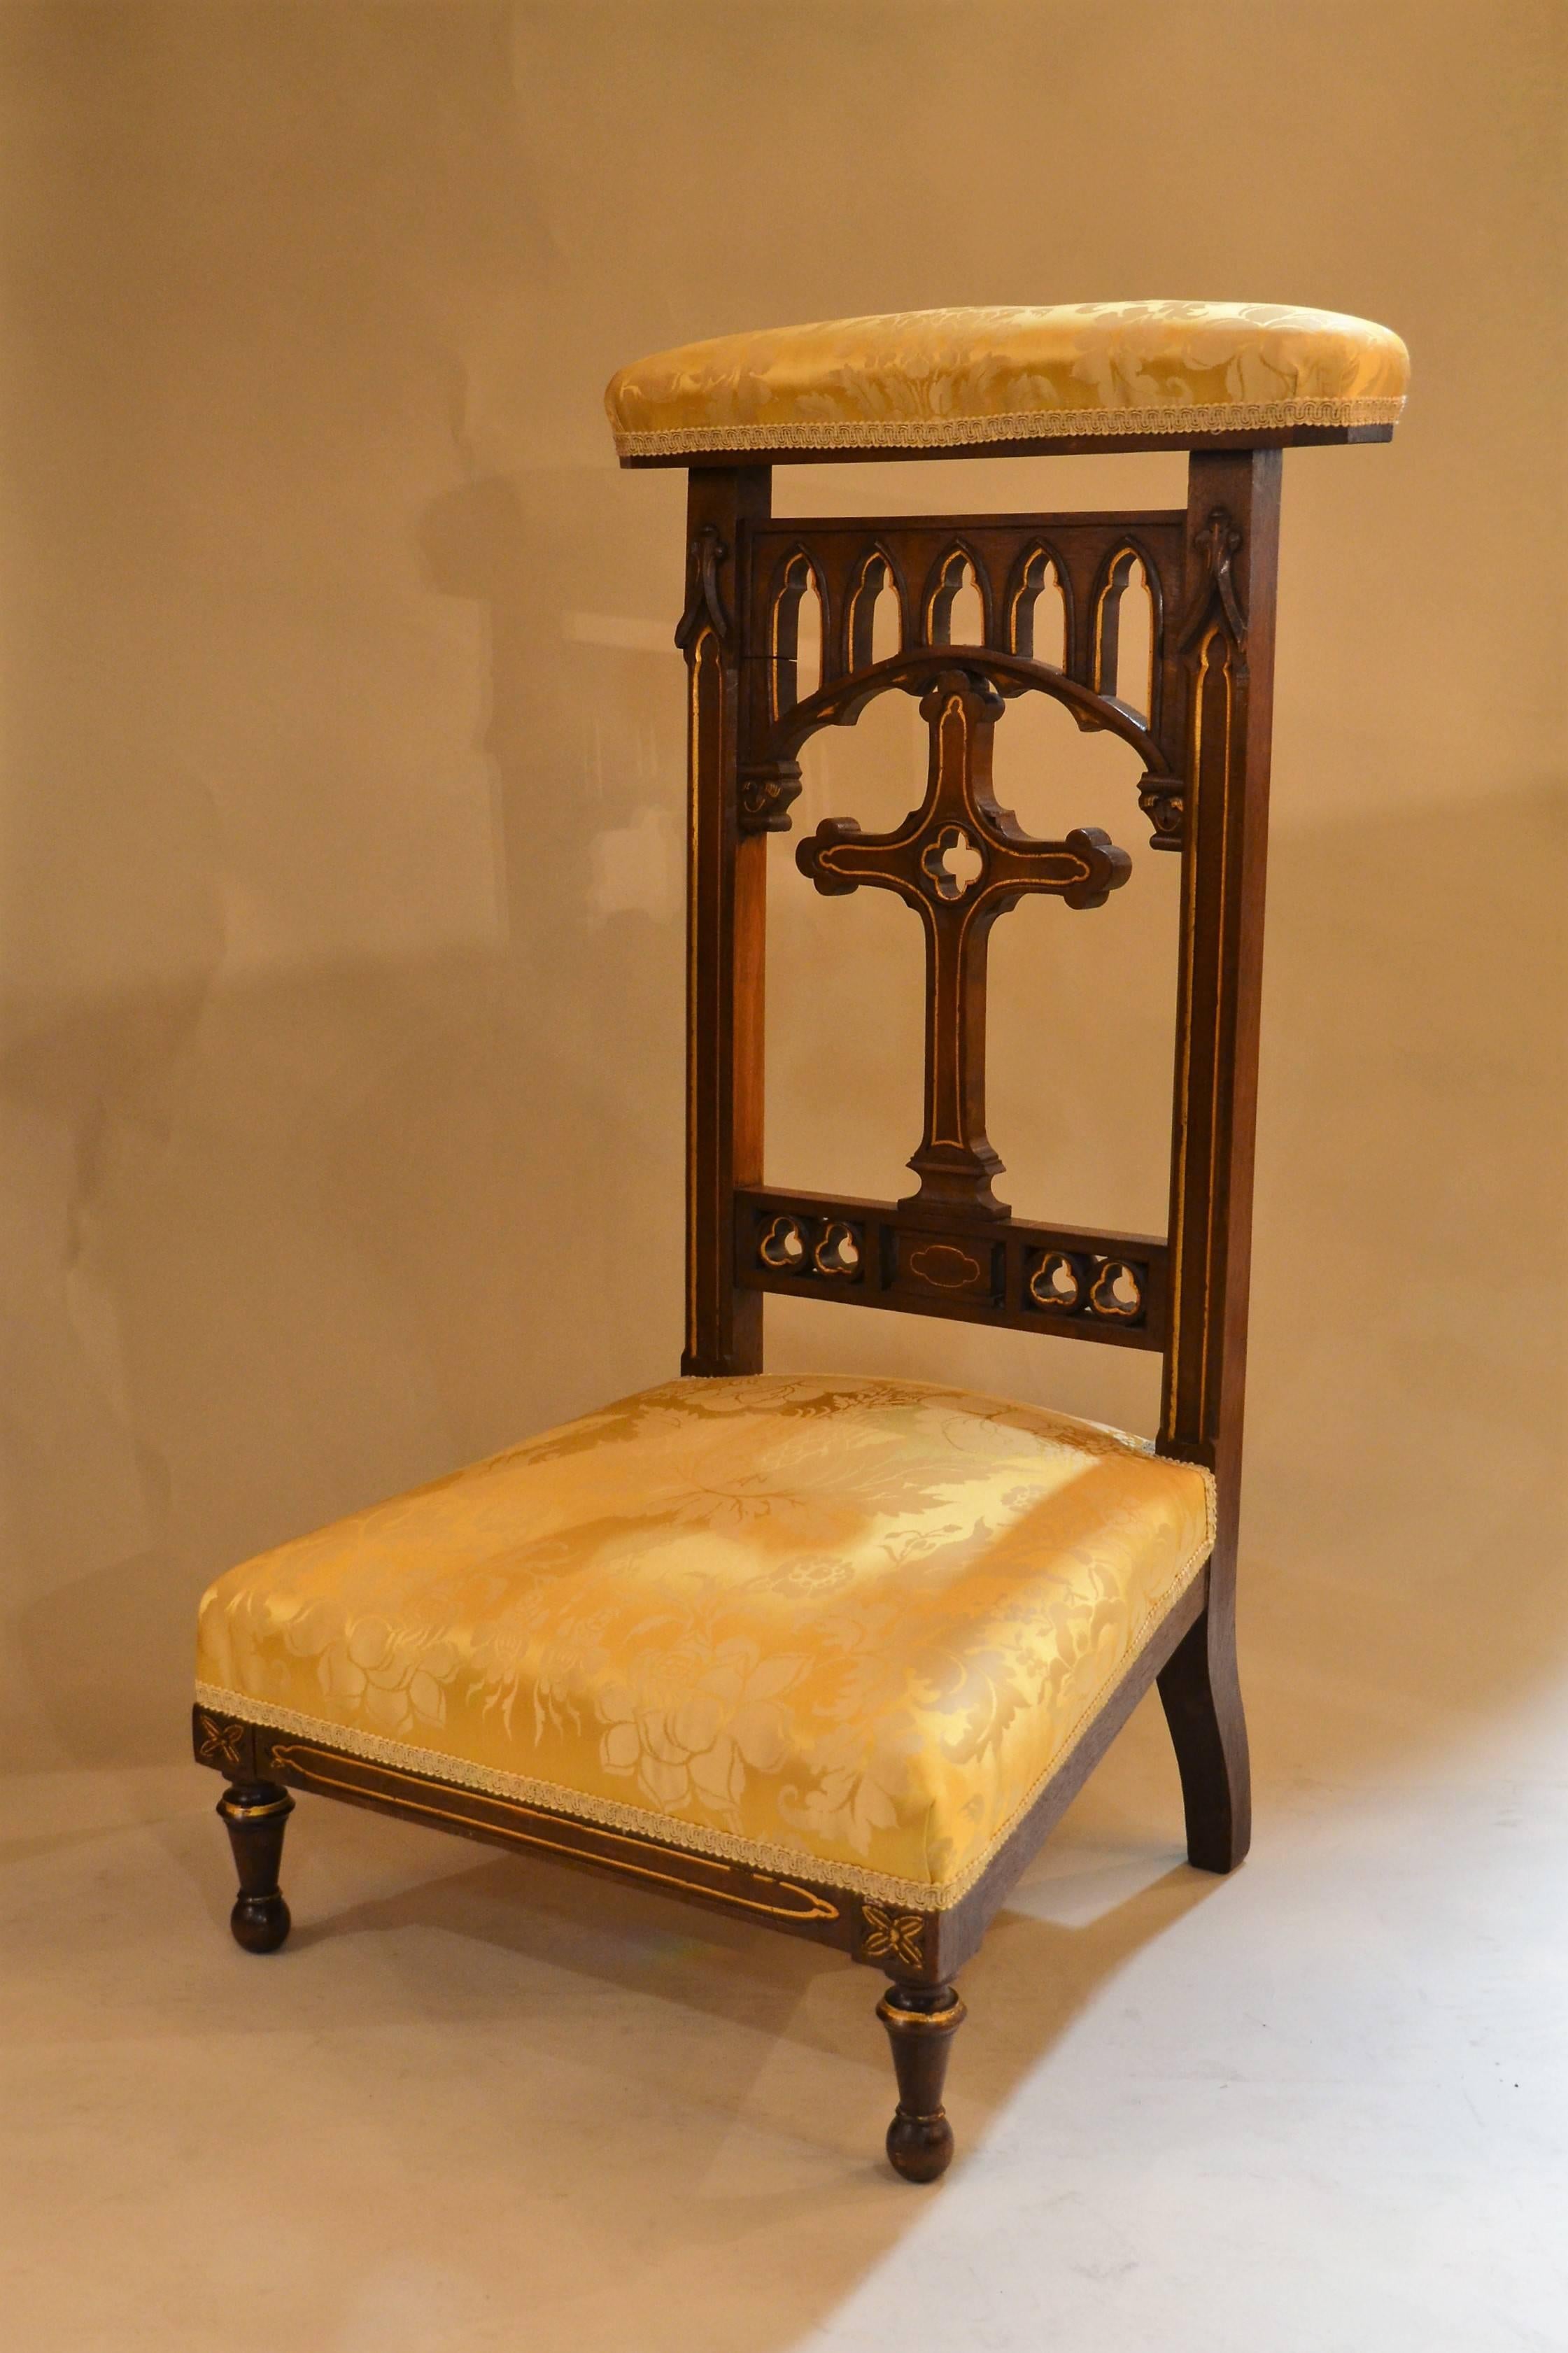 Antique French walnut prie dieu prayer chair, circa 19th century.